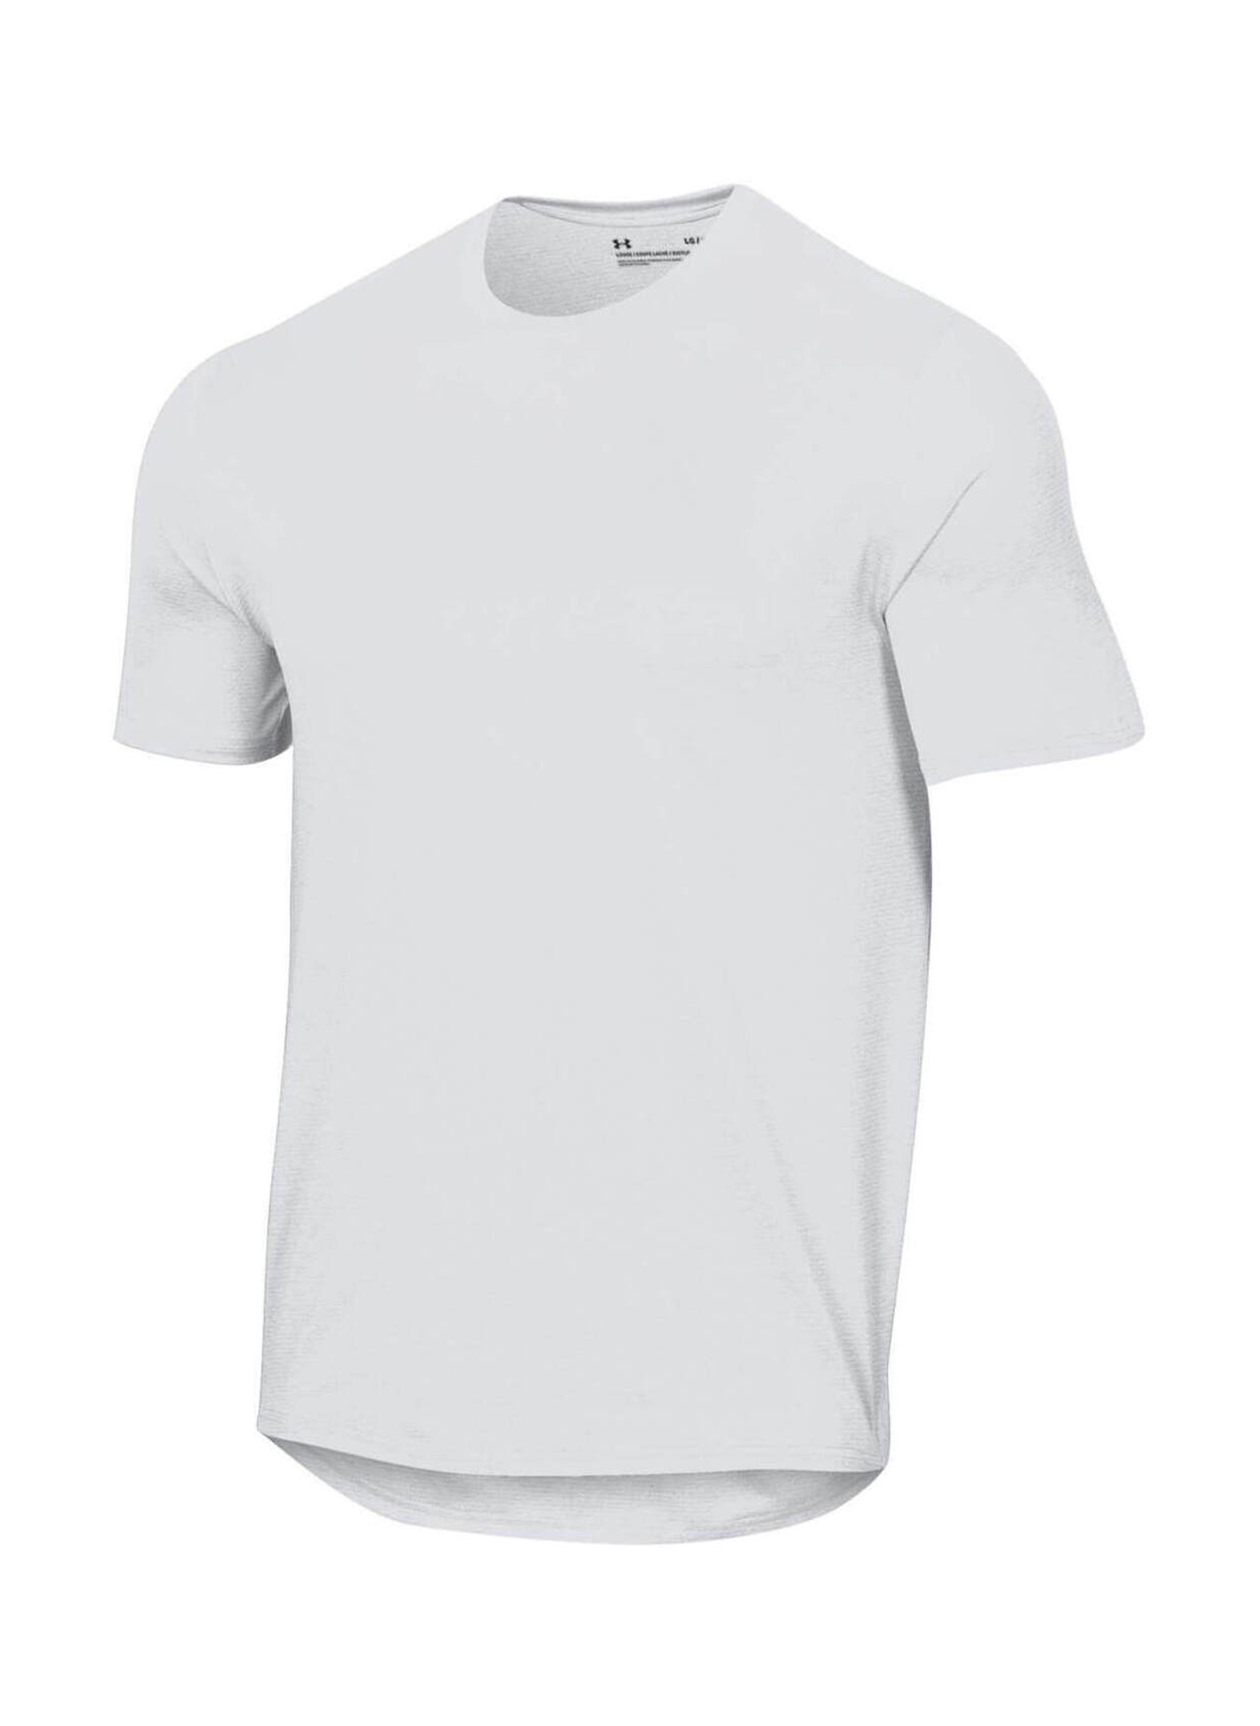 T-Shirt Under Armour Training Vent Graphic - Black/White - men´s